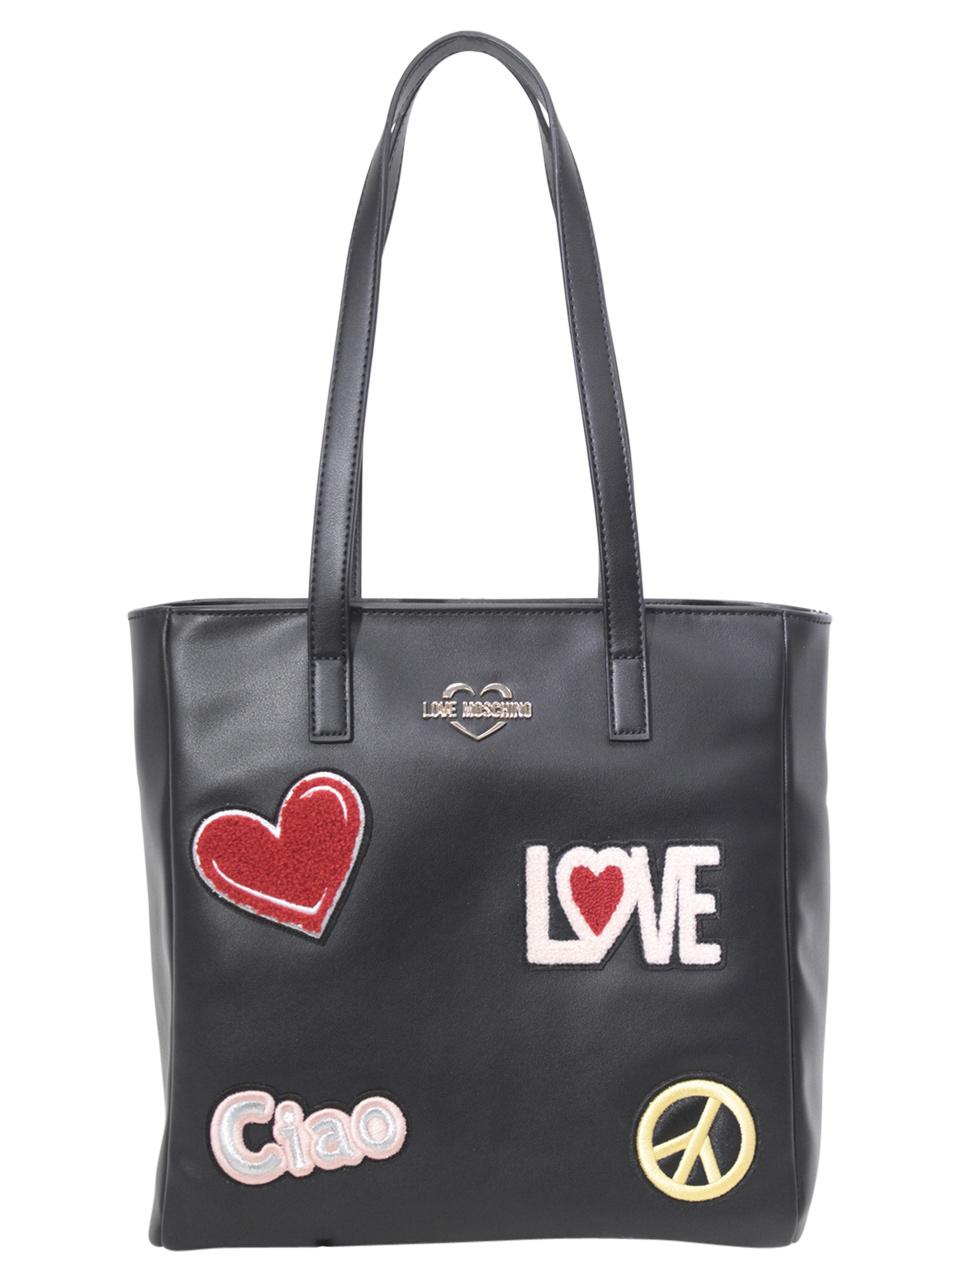 love moschino handbag